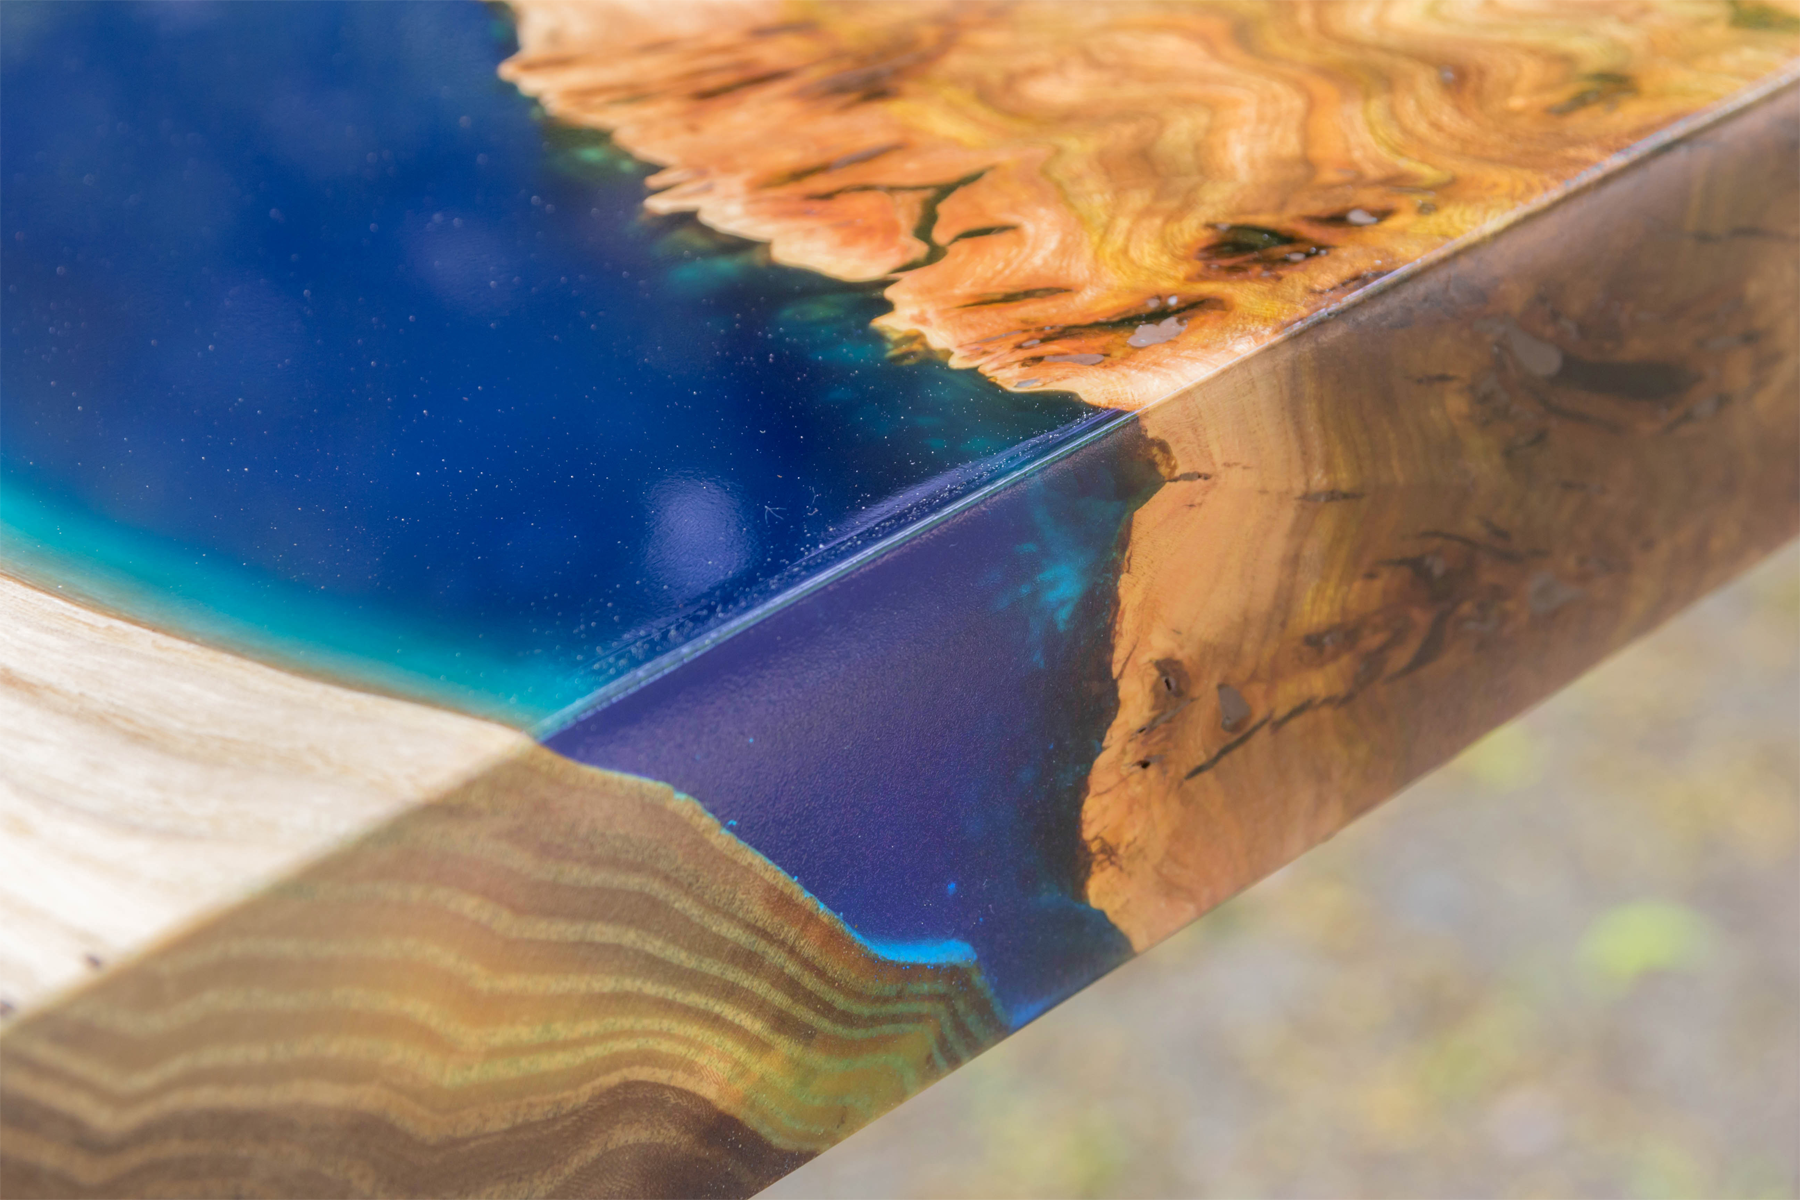 The edge of a beautiful blue live edge epoxy table